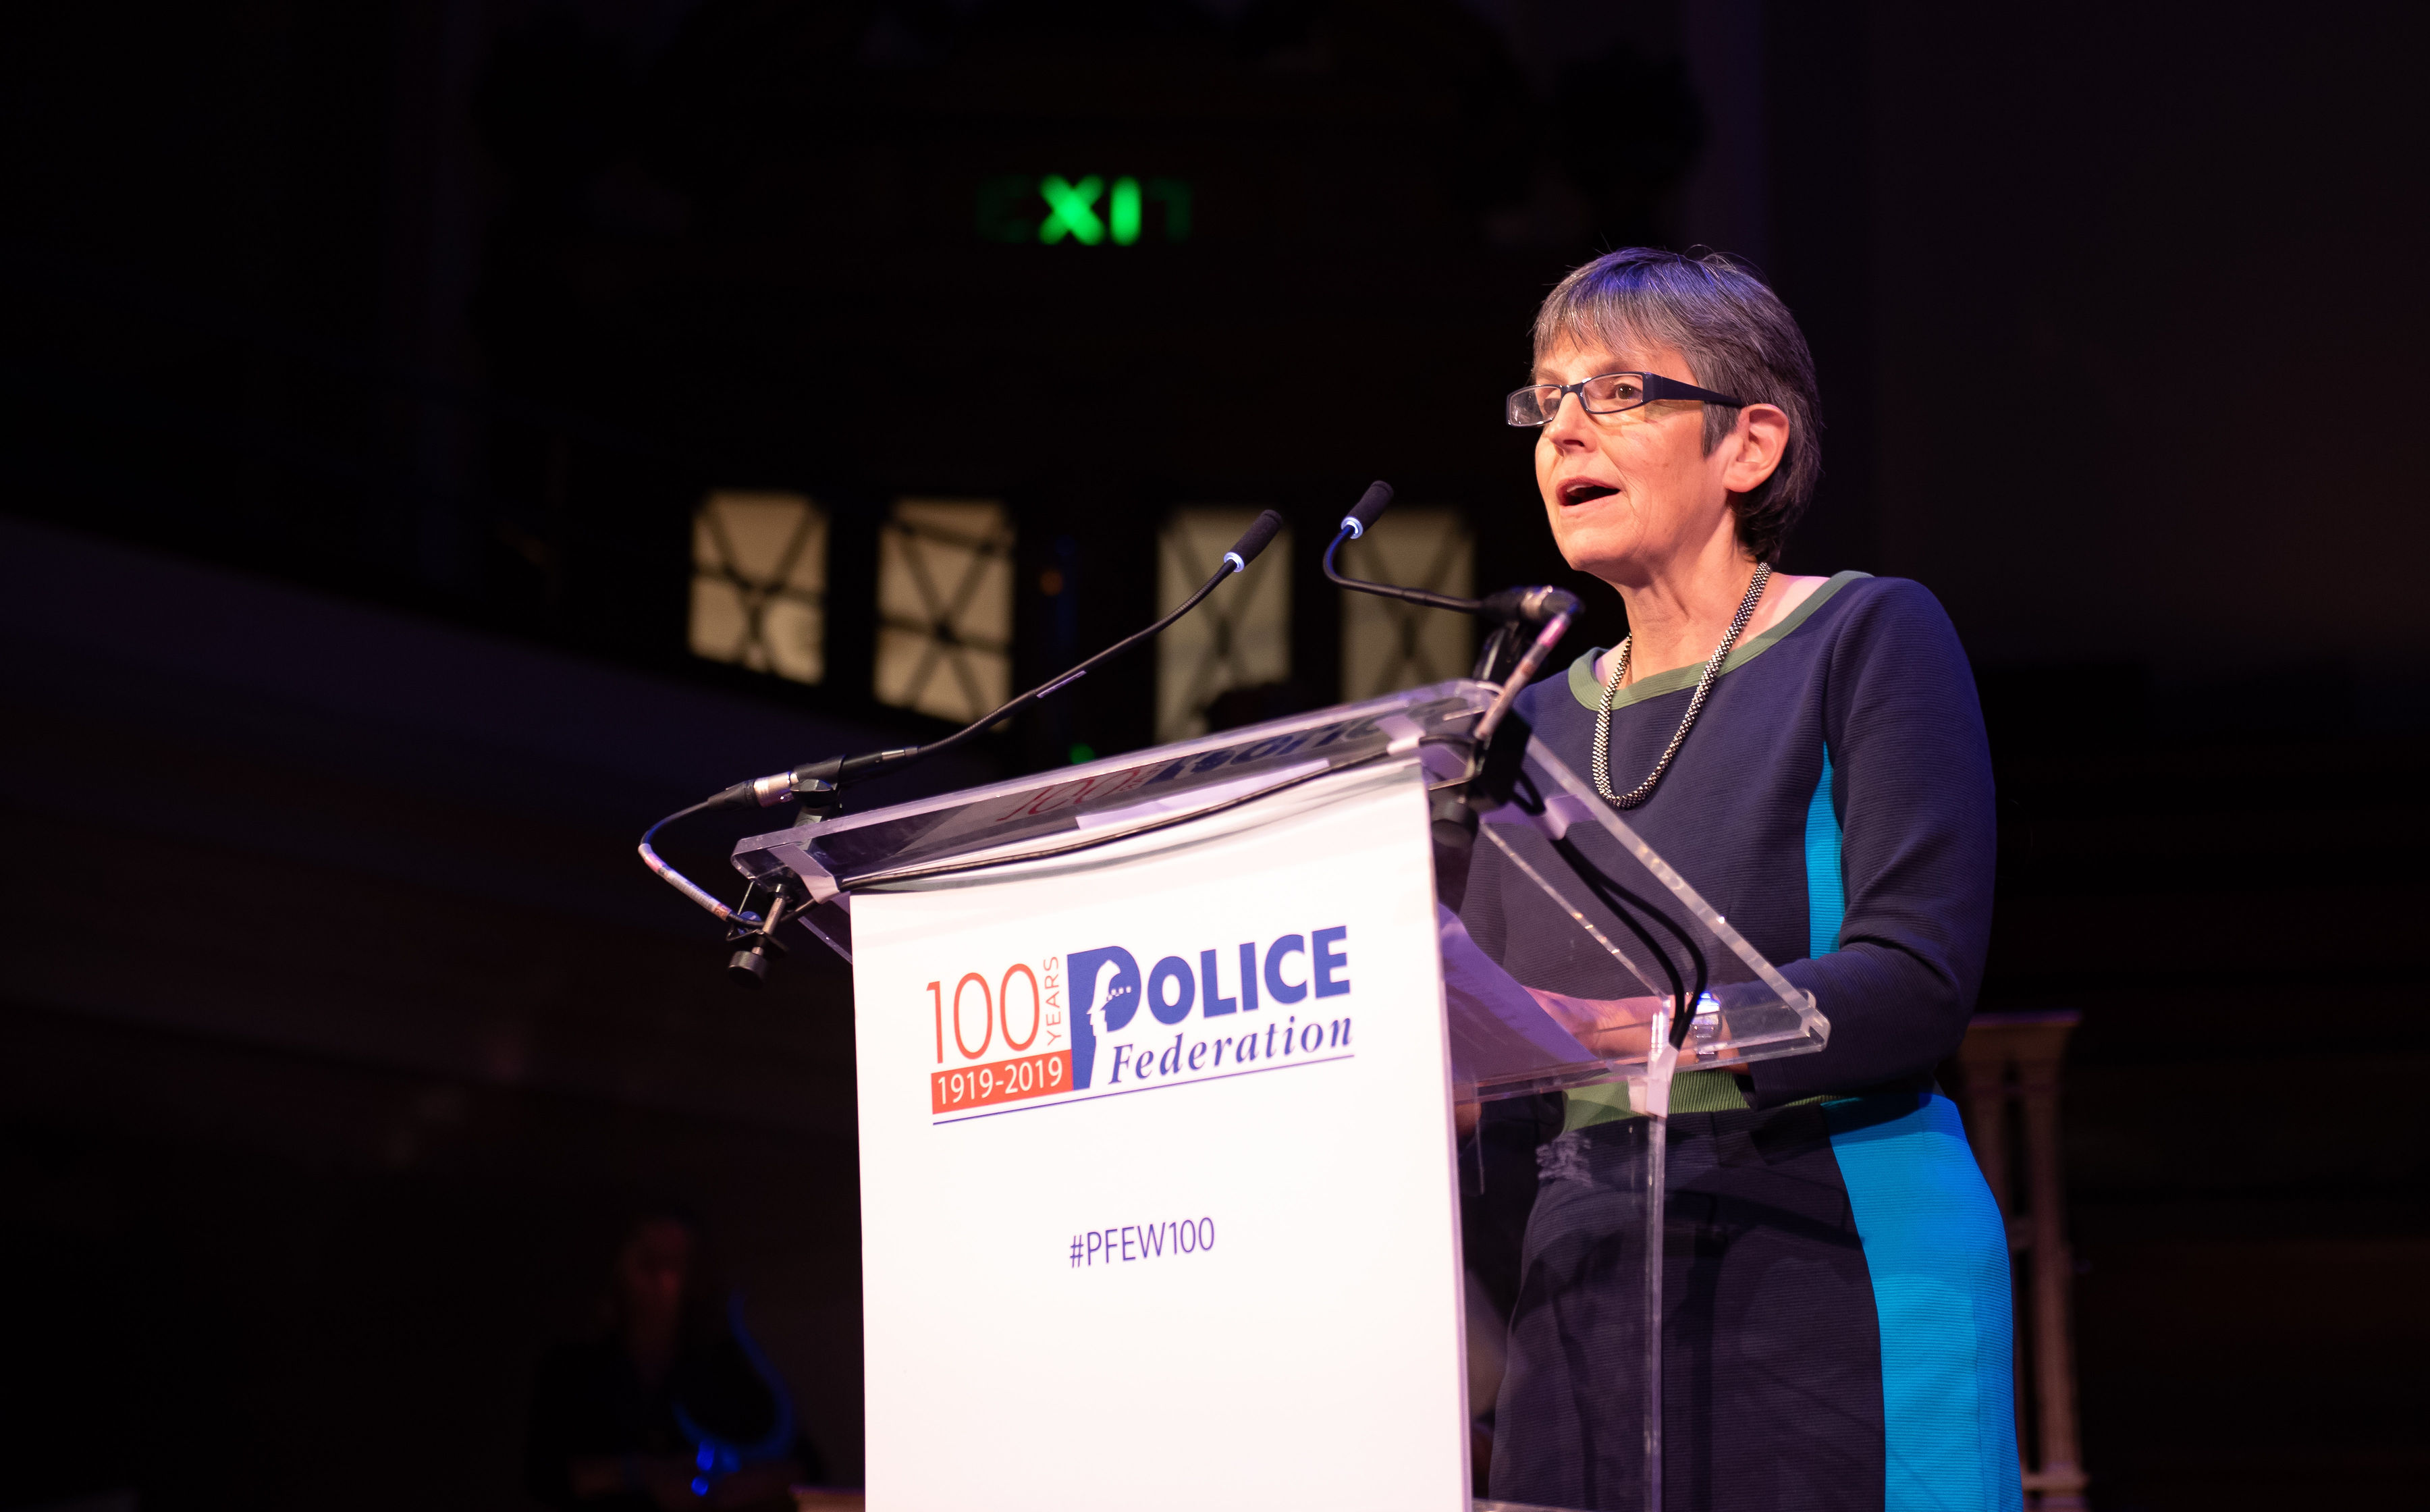 Met Commissioner Dame Cressida Dick announces Women in Policing Award winner